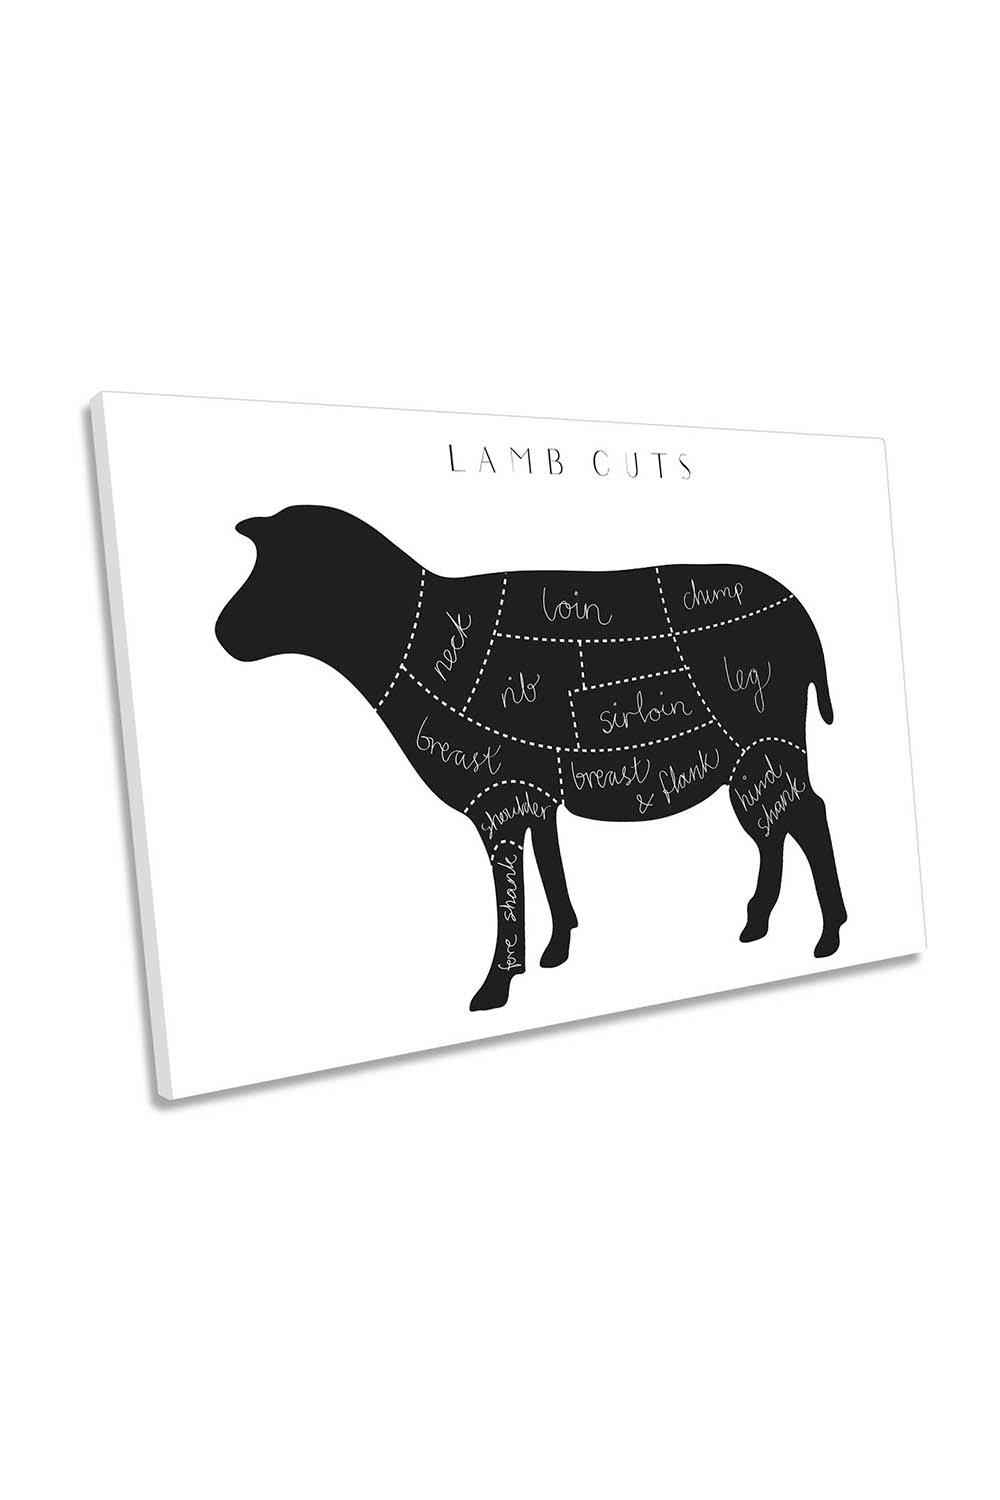 Lamb Cuts Butcher Kitchen Canvas Wall Art Picture Print